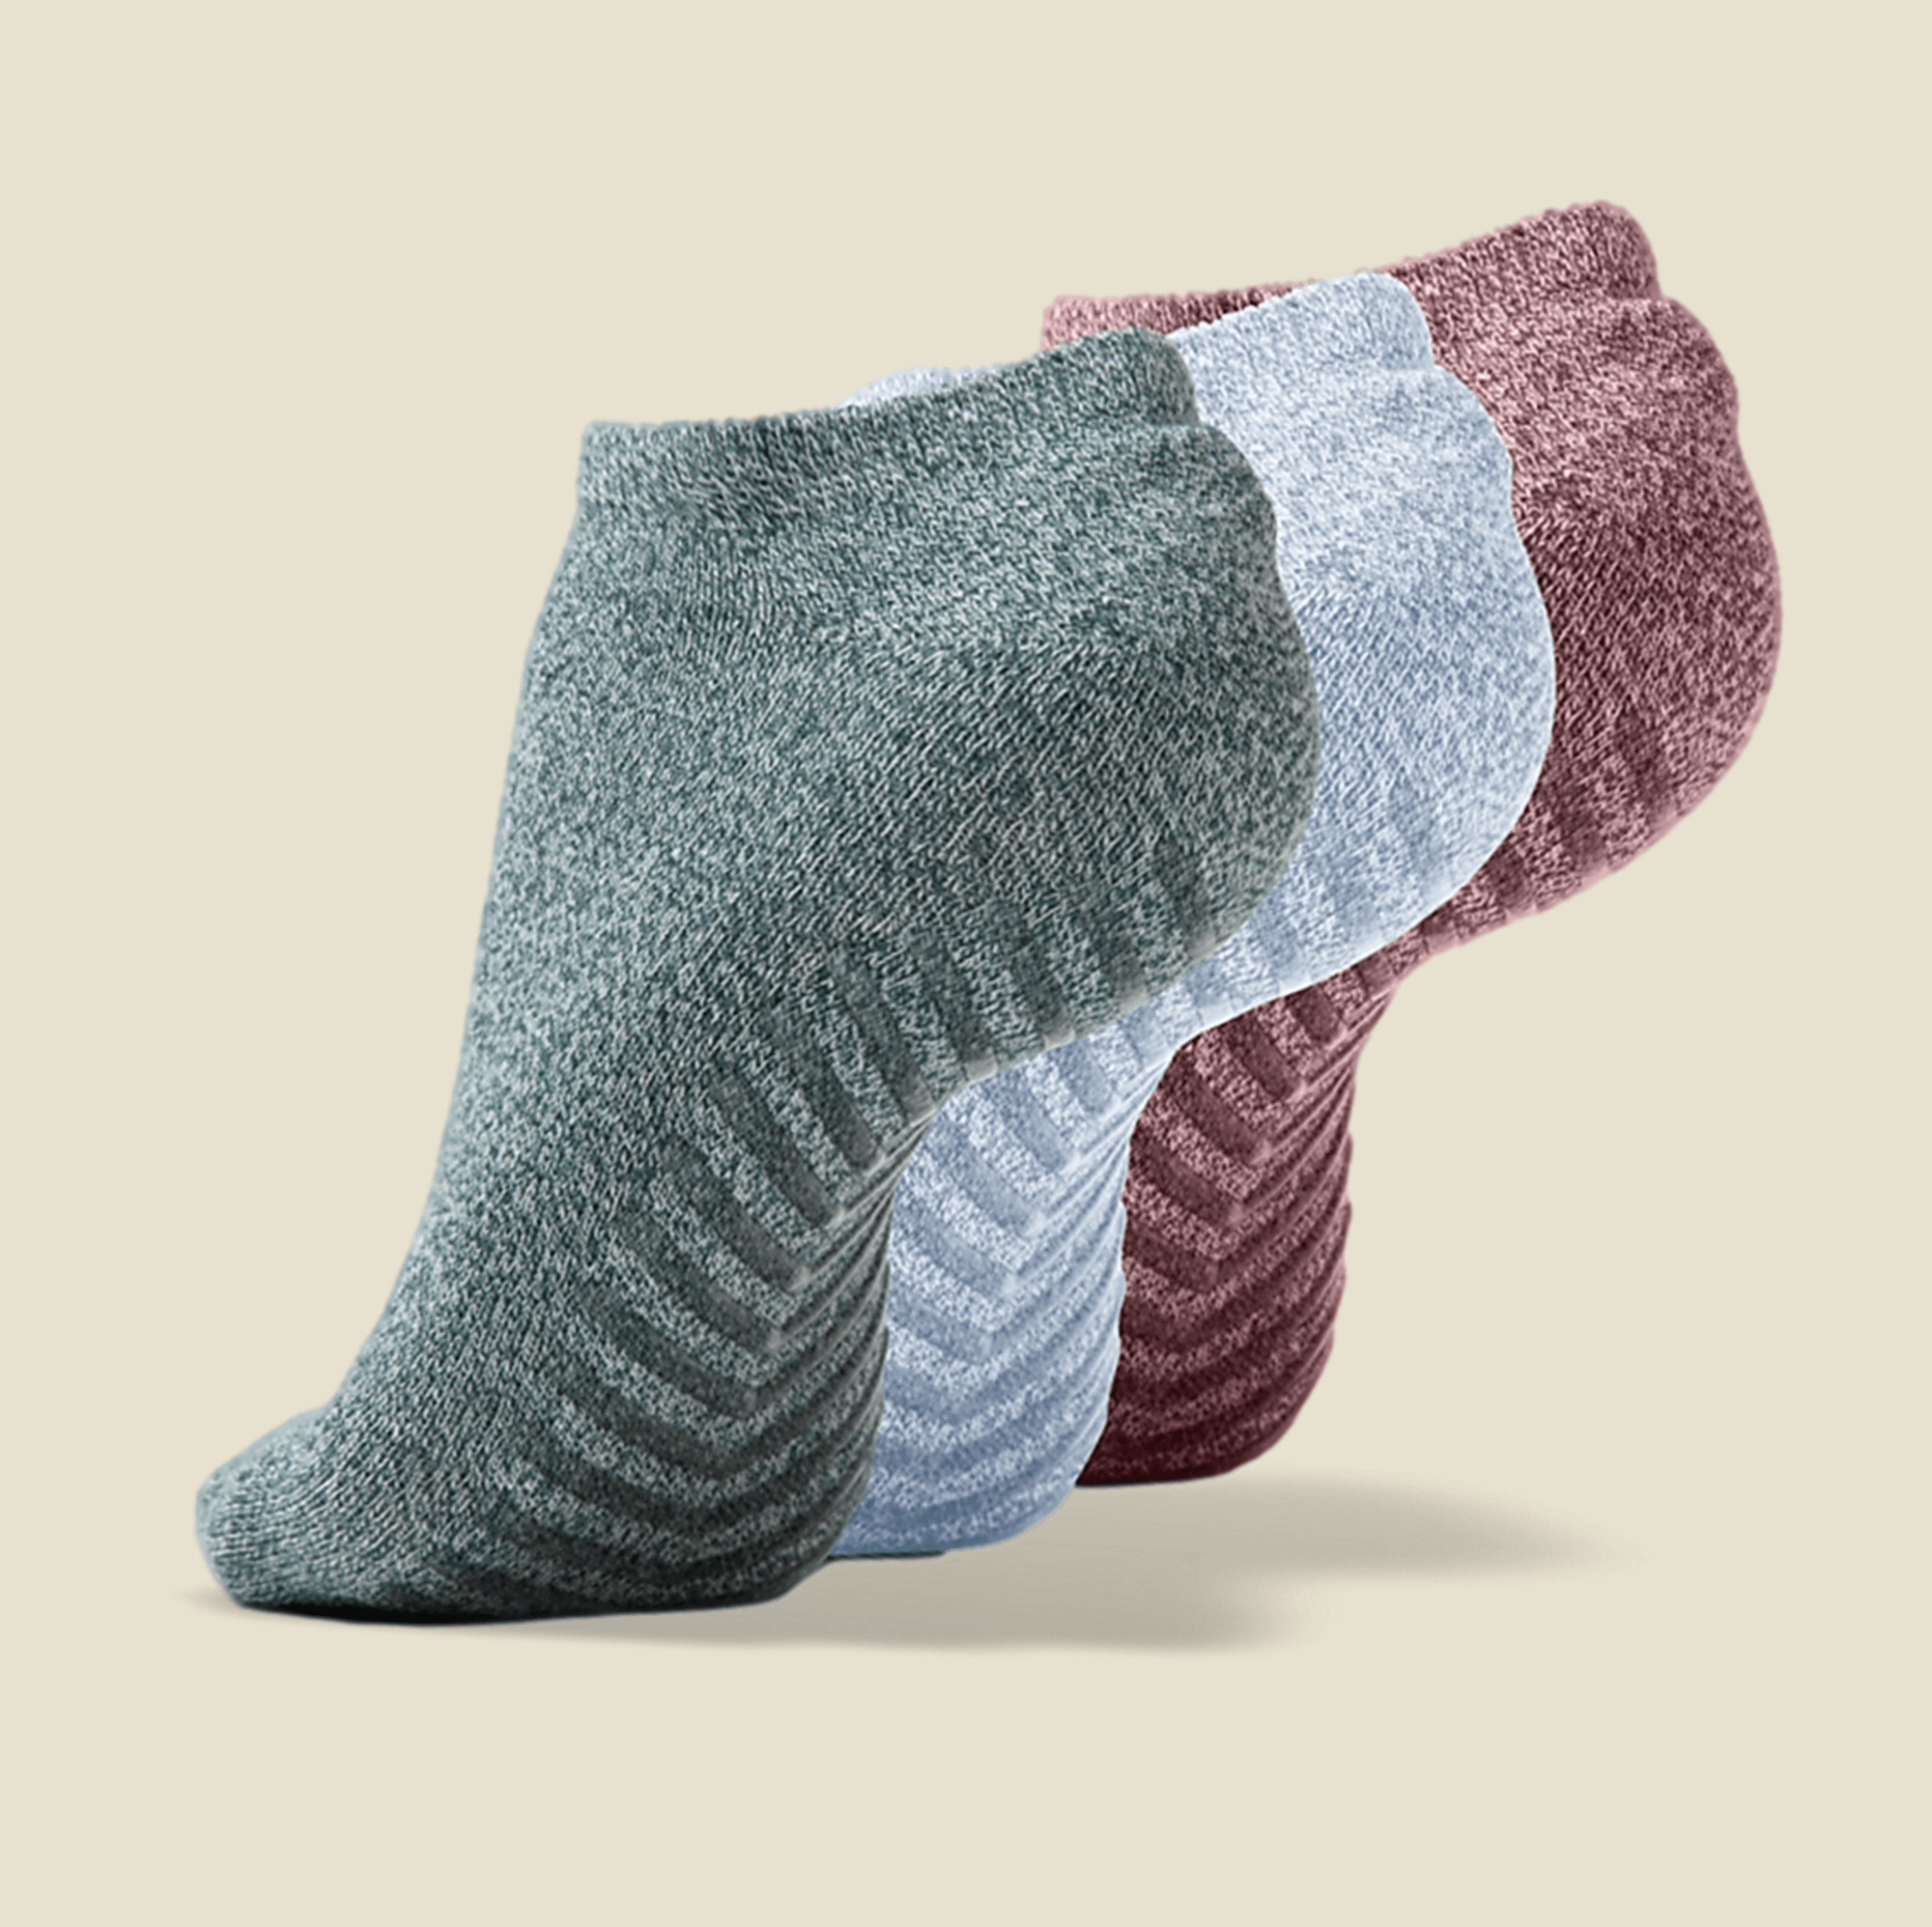 Women's Green, Blue, Maroon Low Cut Ankle Non Skid Socks - 3 pairs - Gripjoy Socks